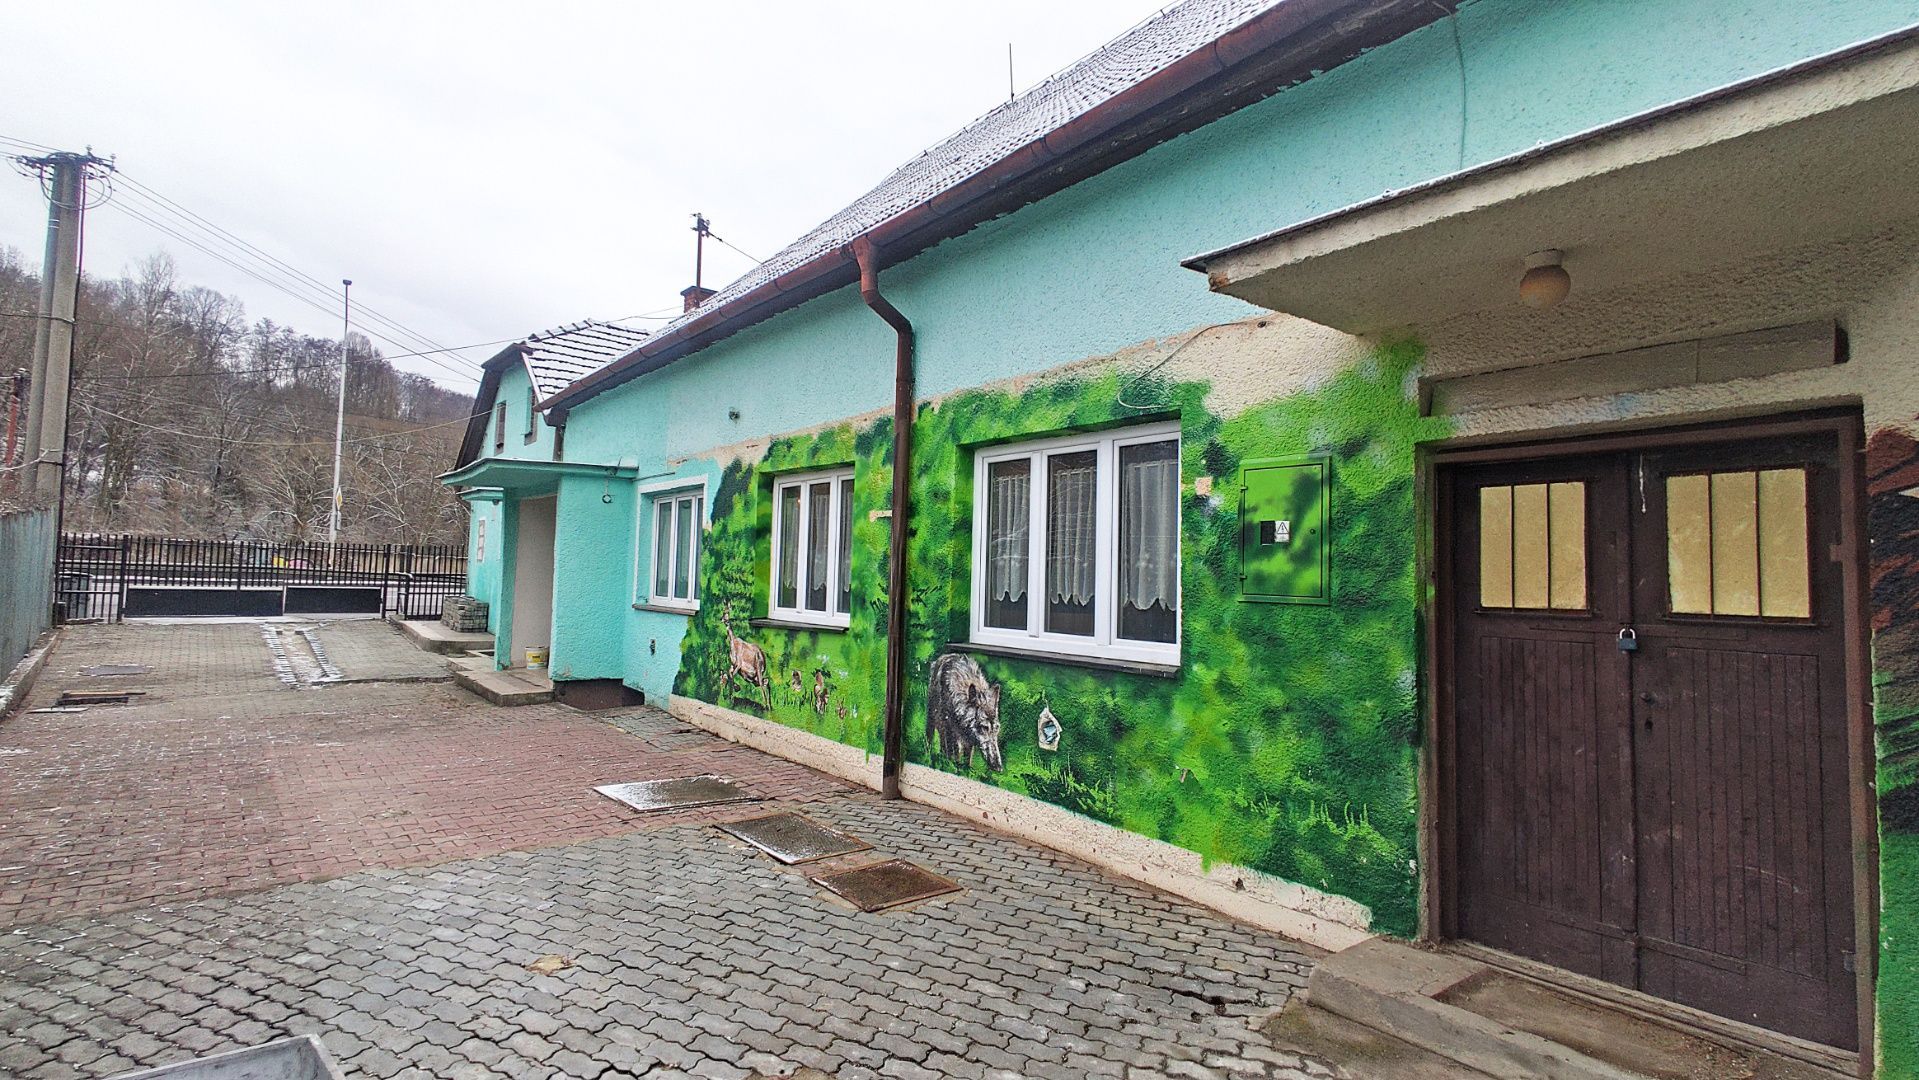 Rodinný dom obec Jalovec - podl. plocha 420 m2